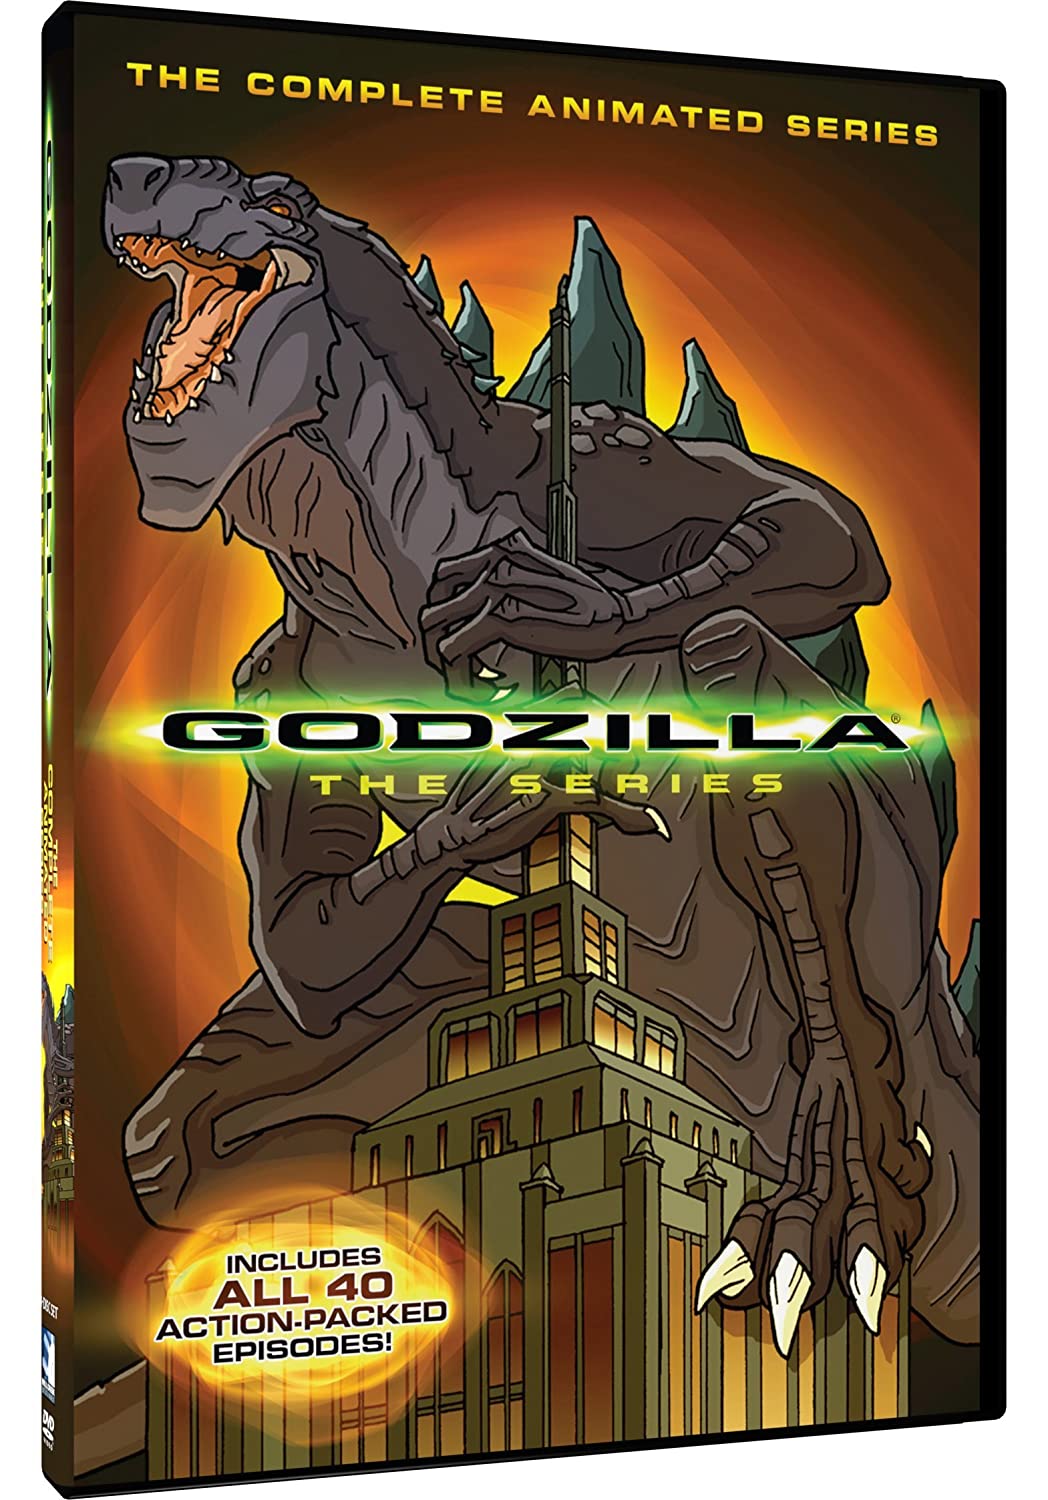 Godzilla: The Complete Animated Series (1998) (DVD) $3.99 via Amazon